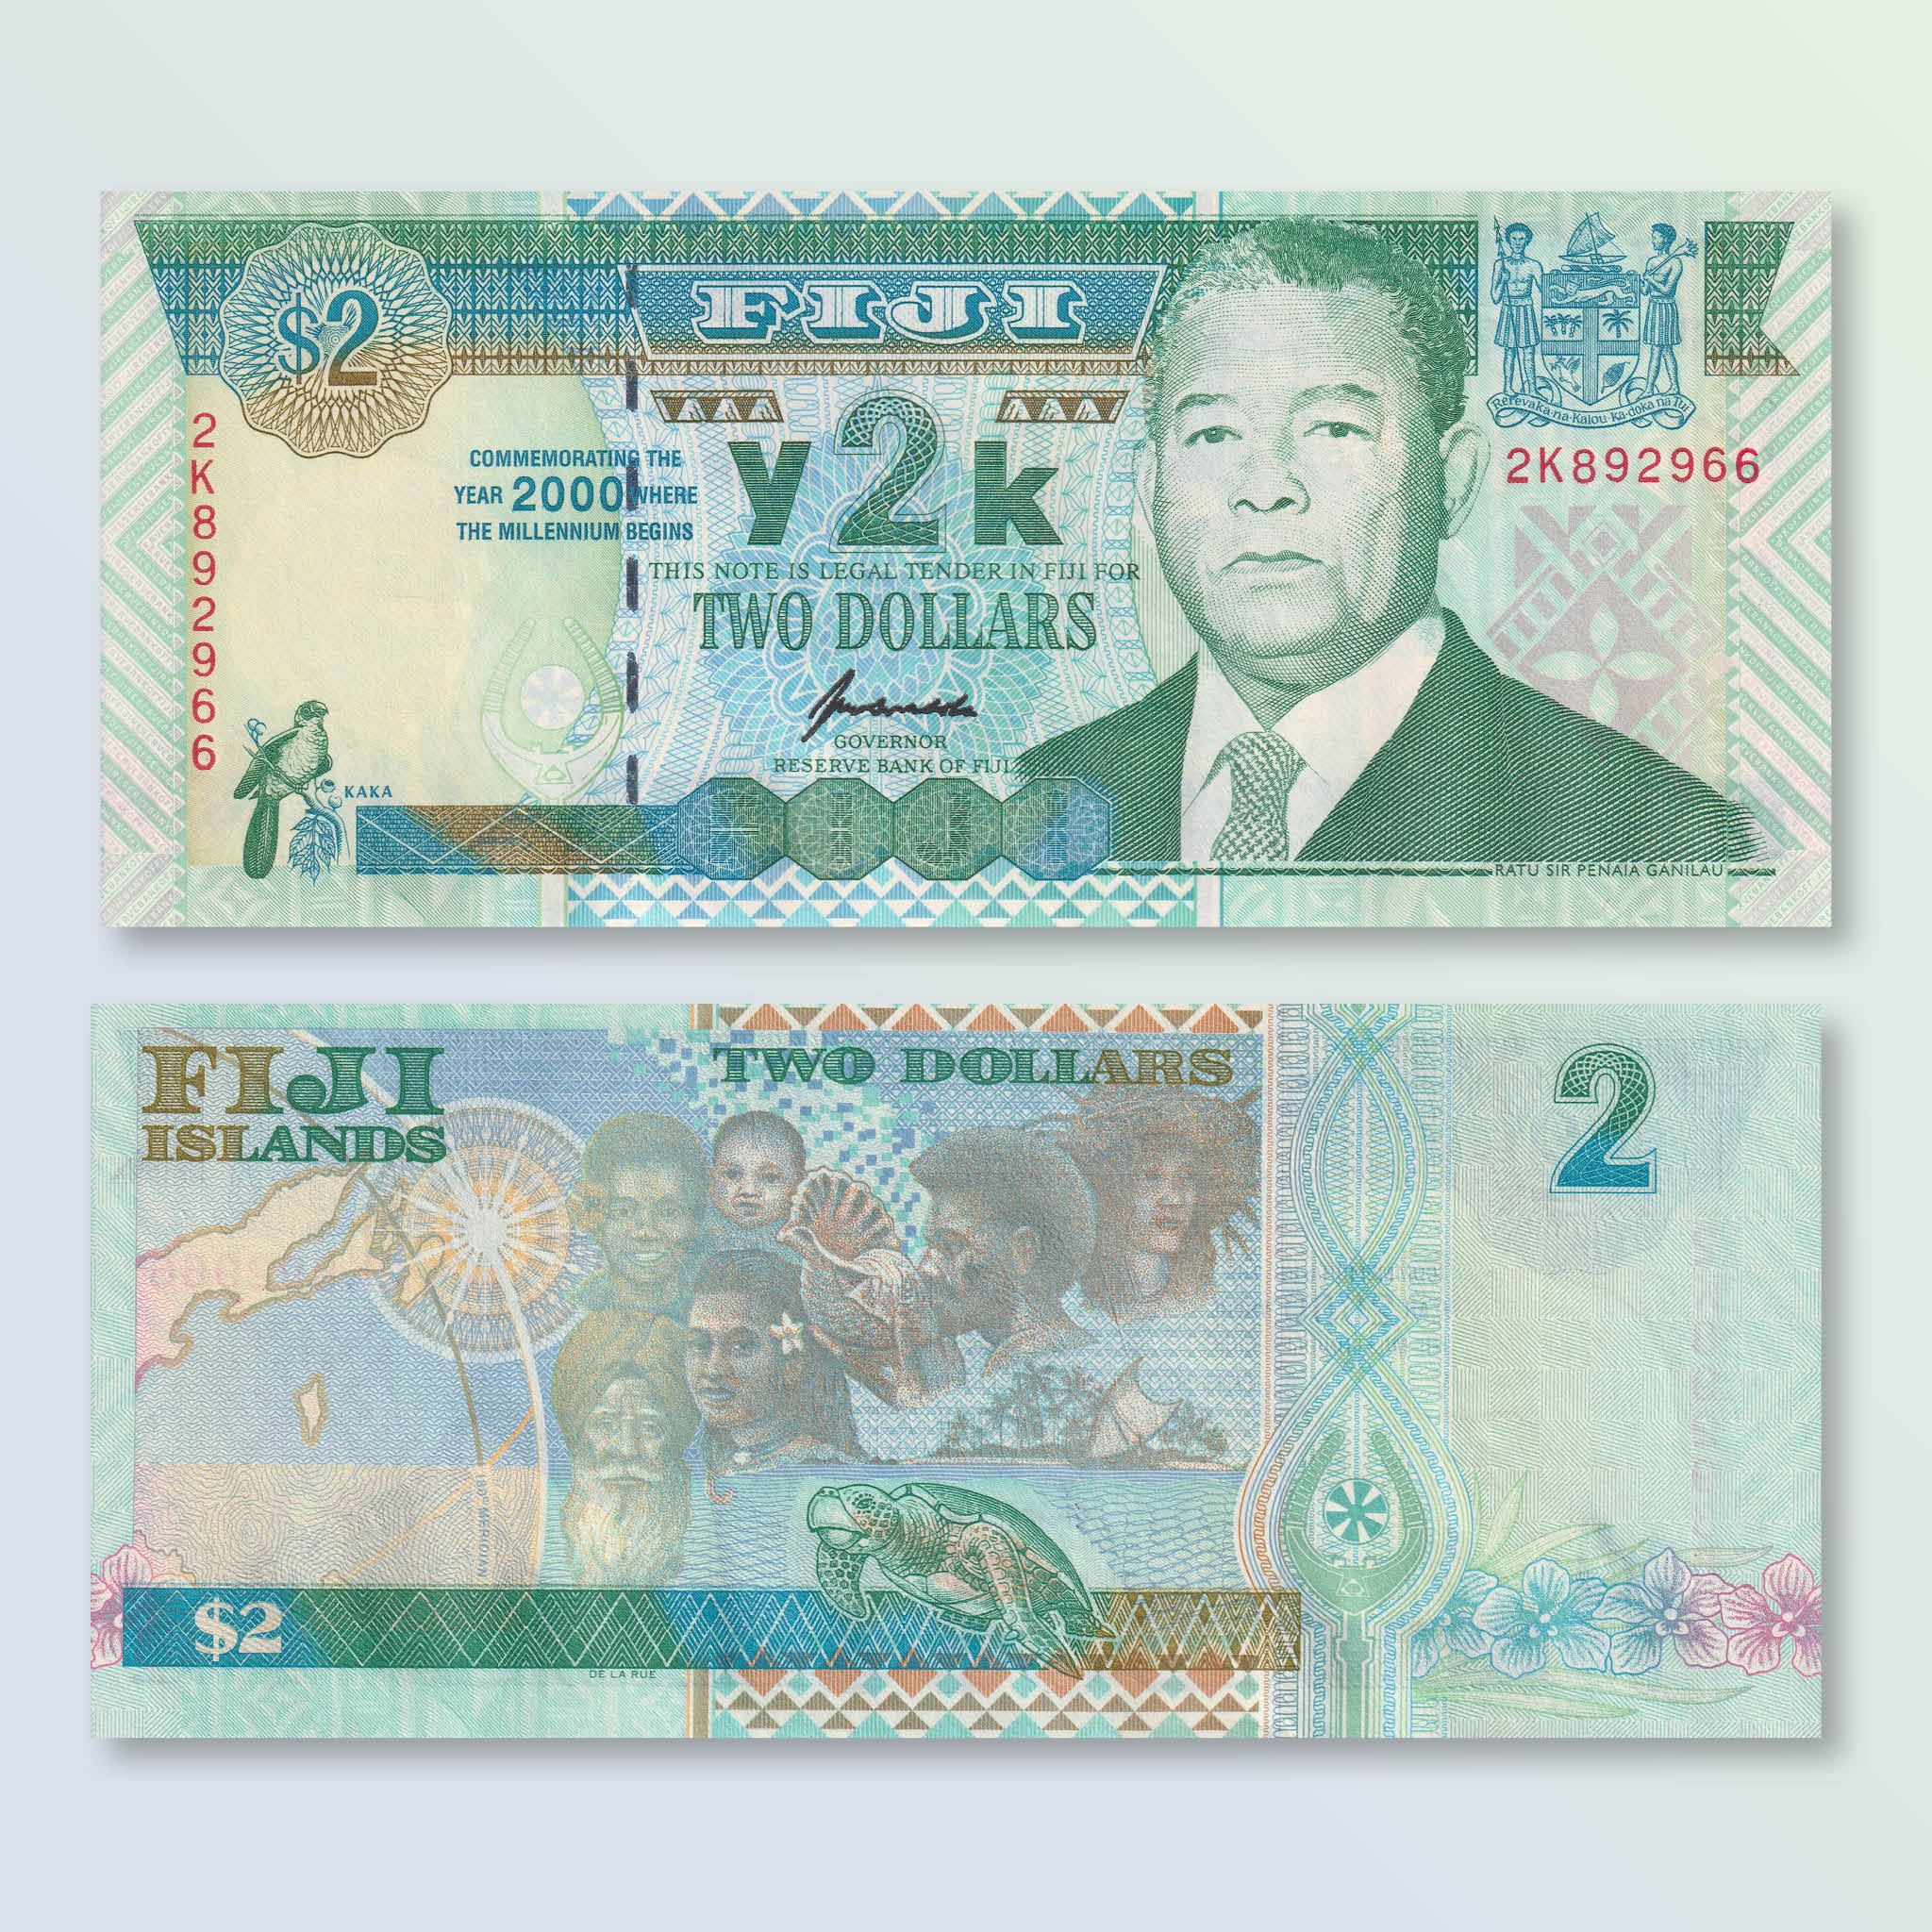 Fiji 2 Dollars, 2000, BNP501b, P102a, UNC - Robert's World Money - World Banknotes